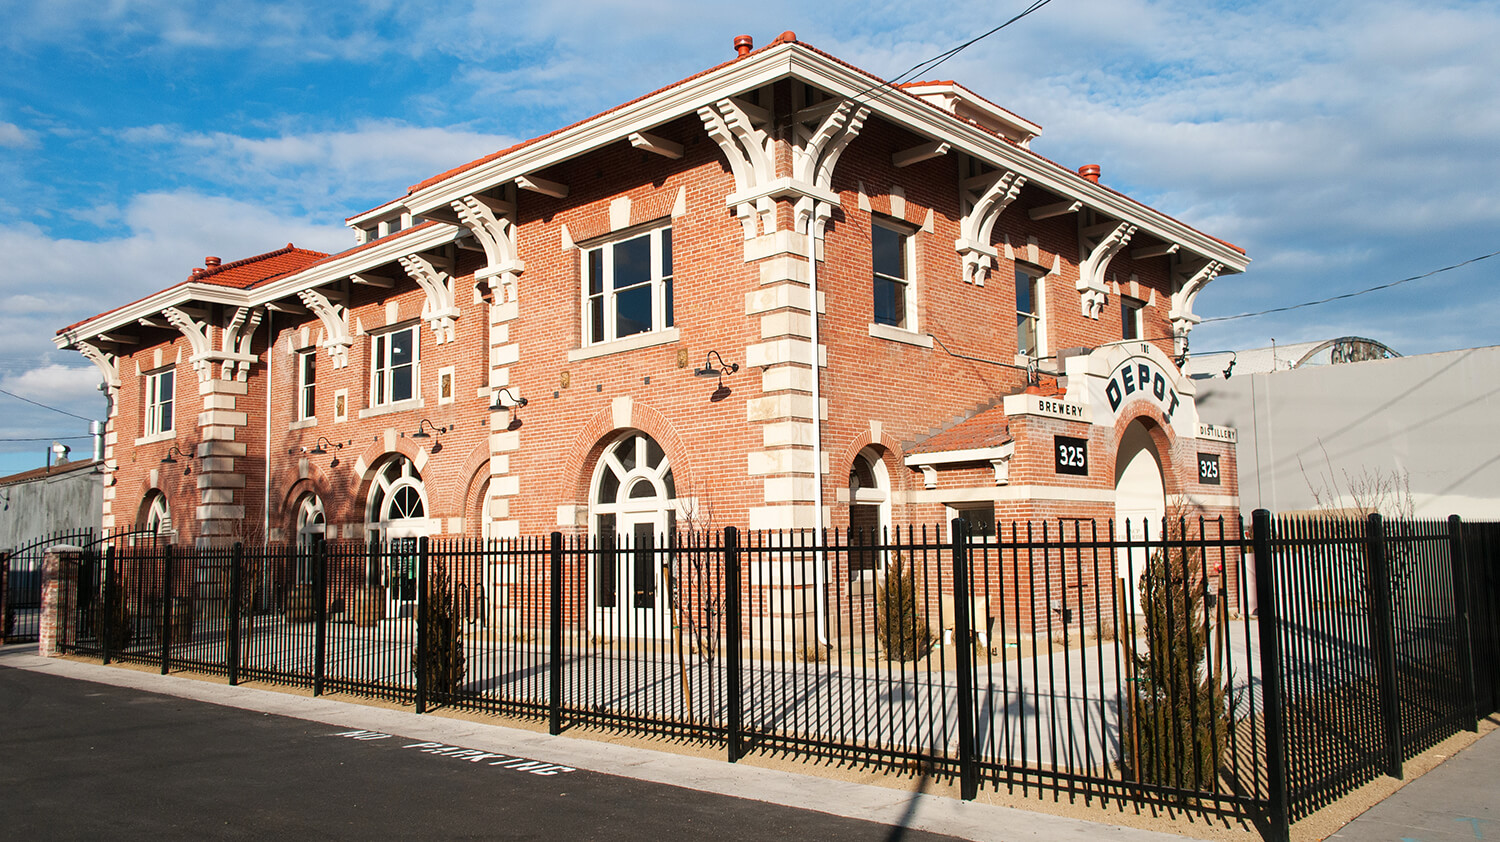 The Depot Craft Brewery Distillery